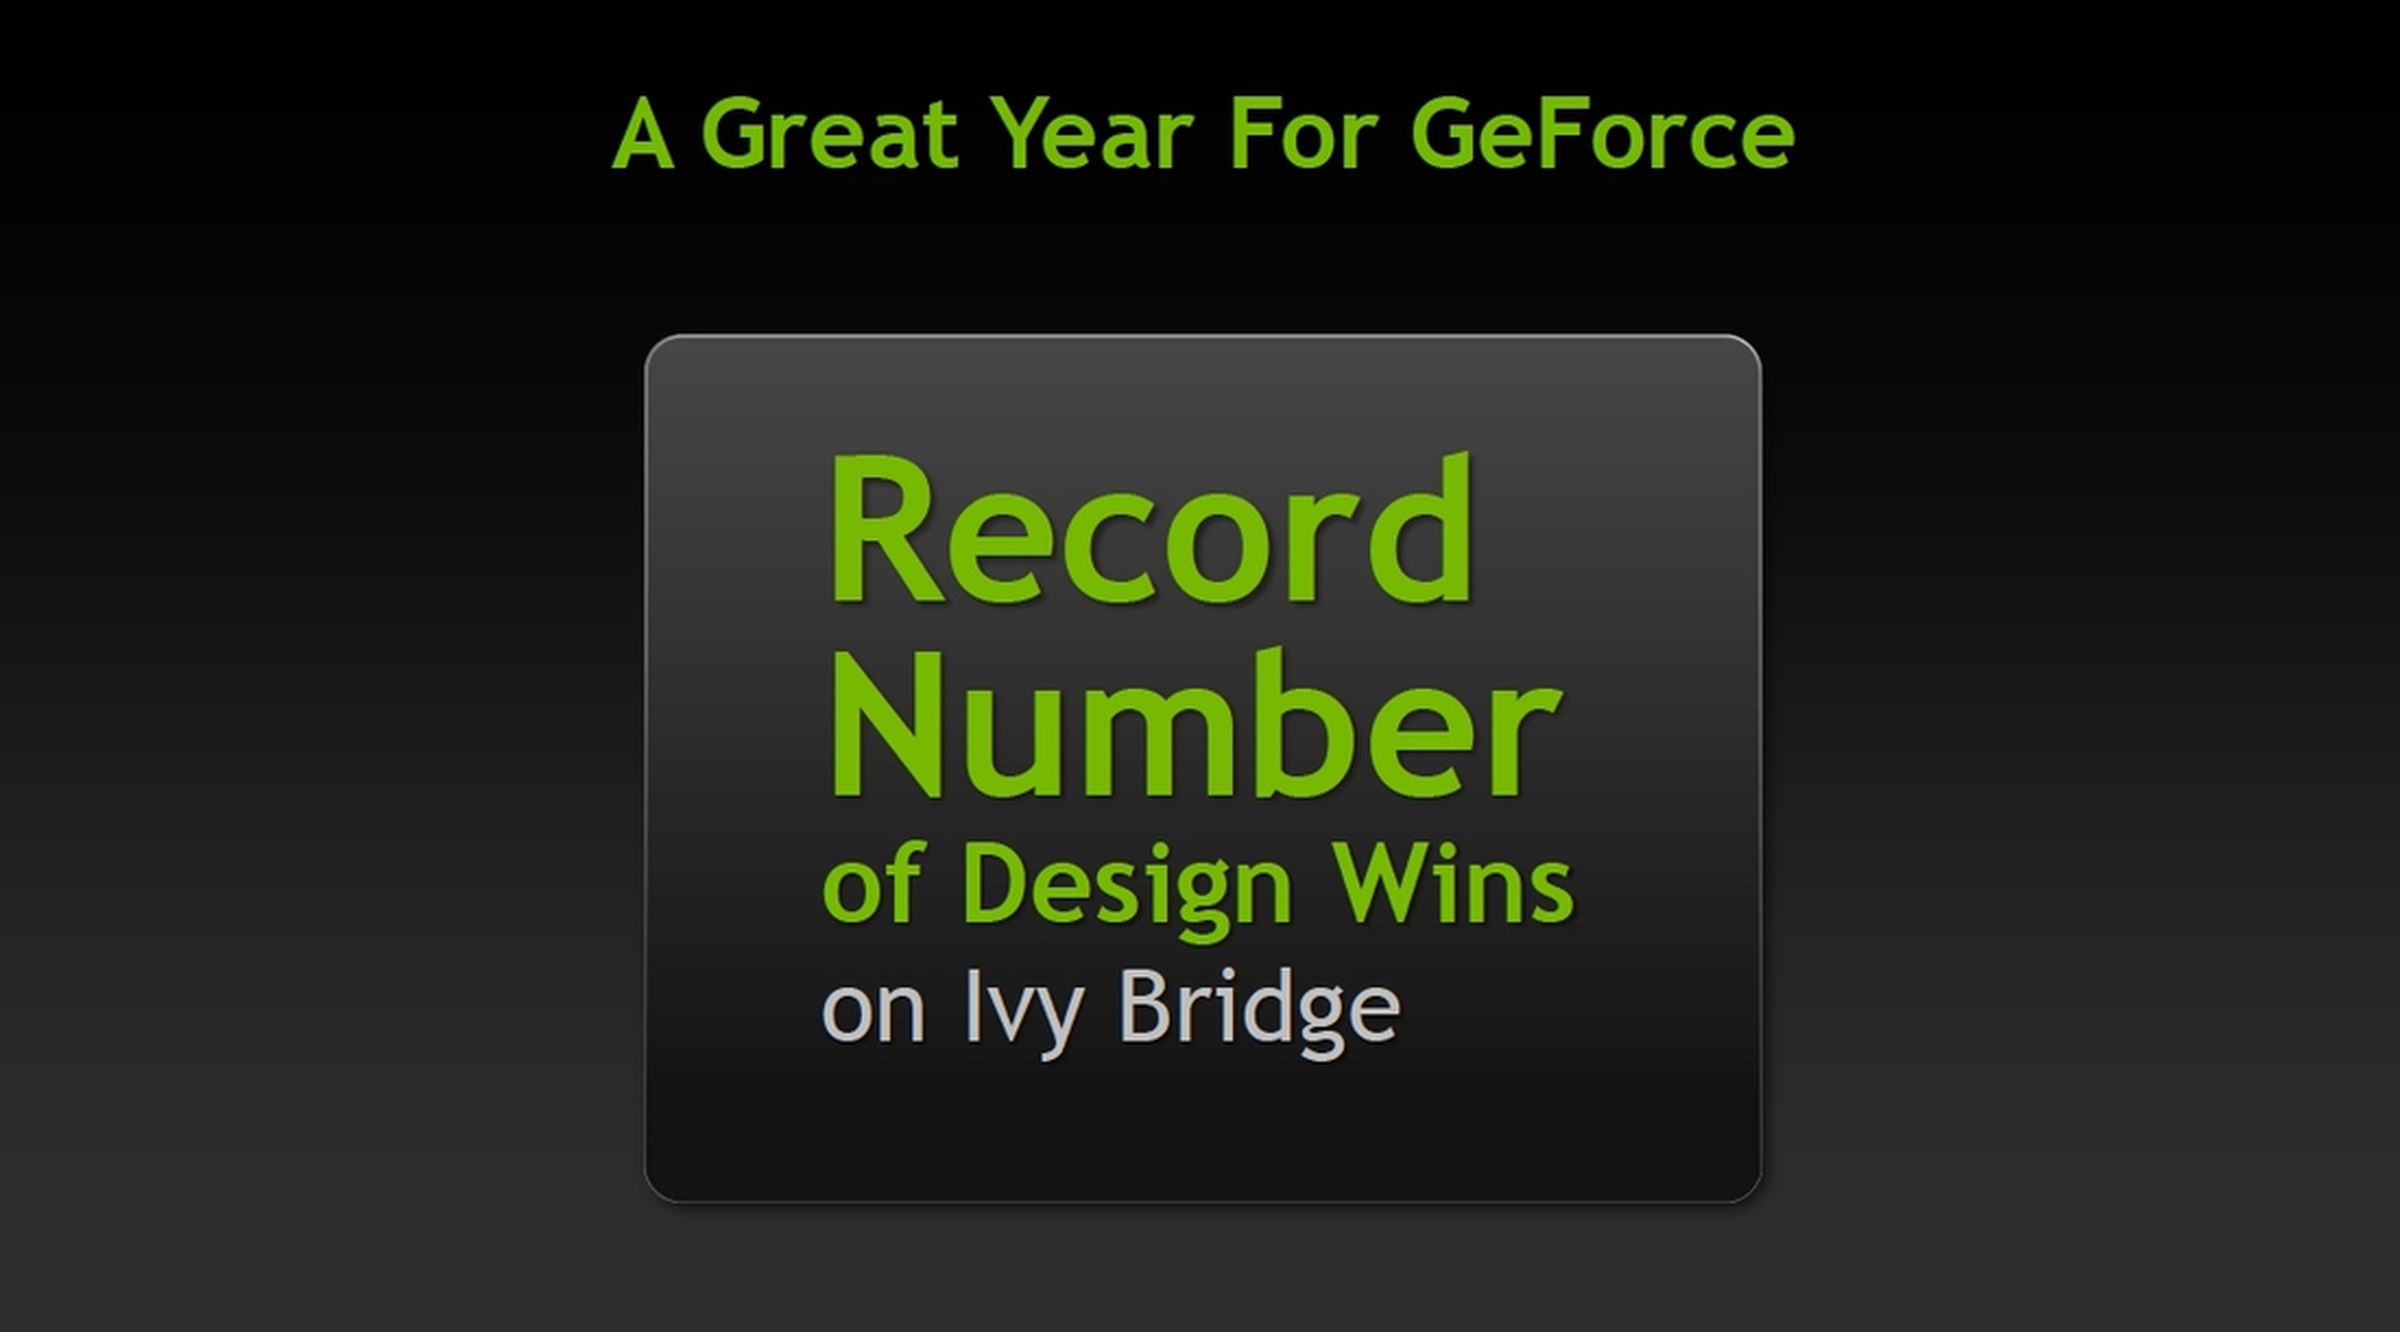 Nvidia GeForce 600M series announcement pictures